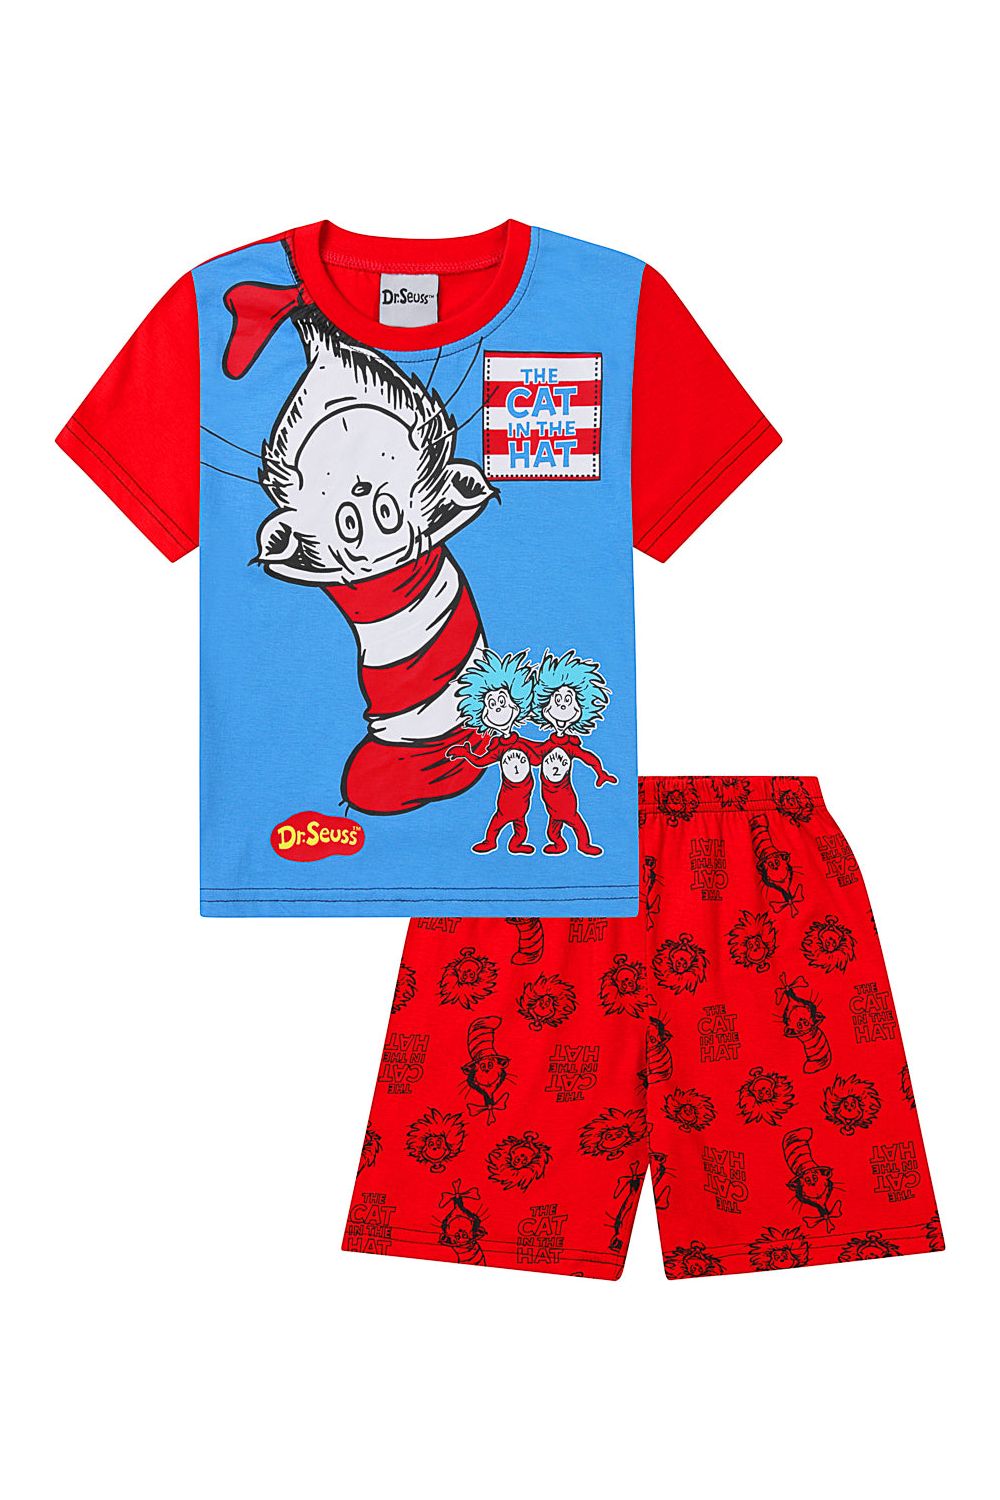 Official Dr Seuss Short Thing 1 Thing 2 Pyjamas Red - Pyjamas.com